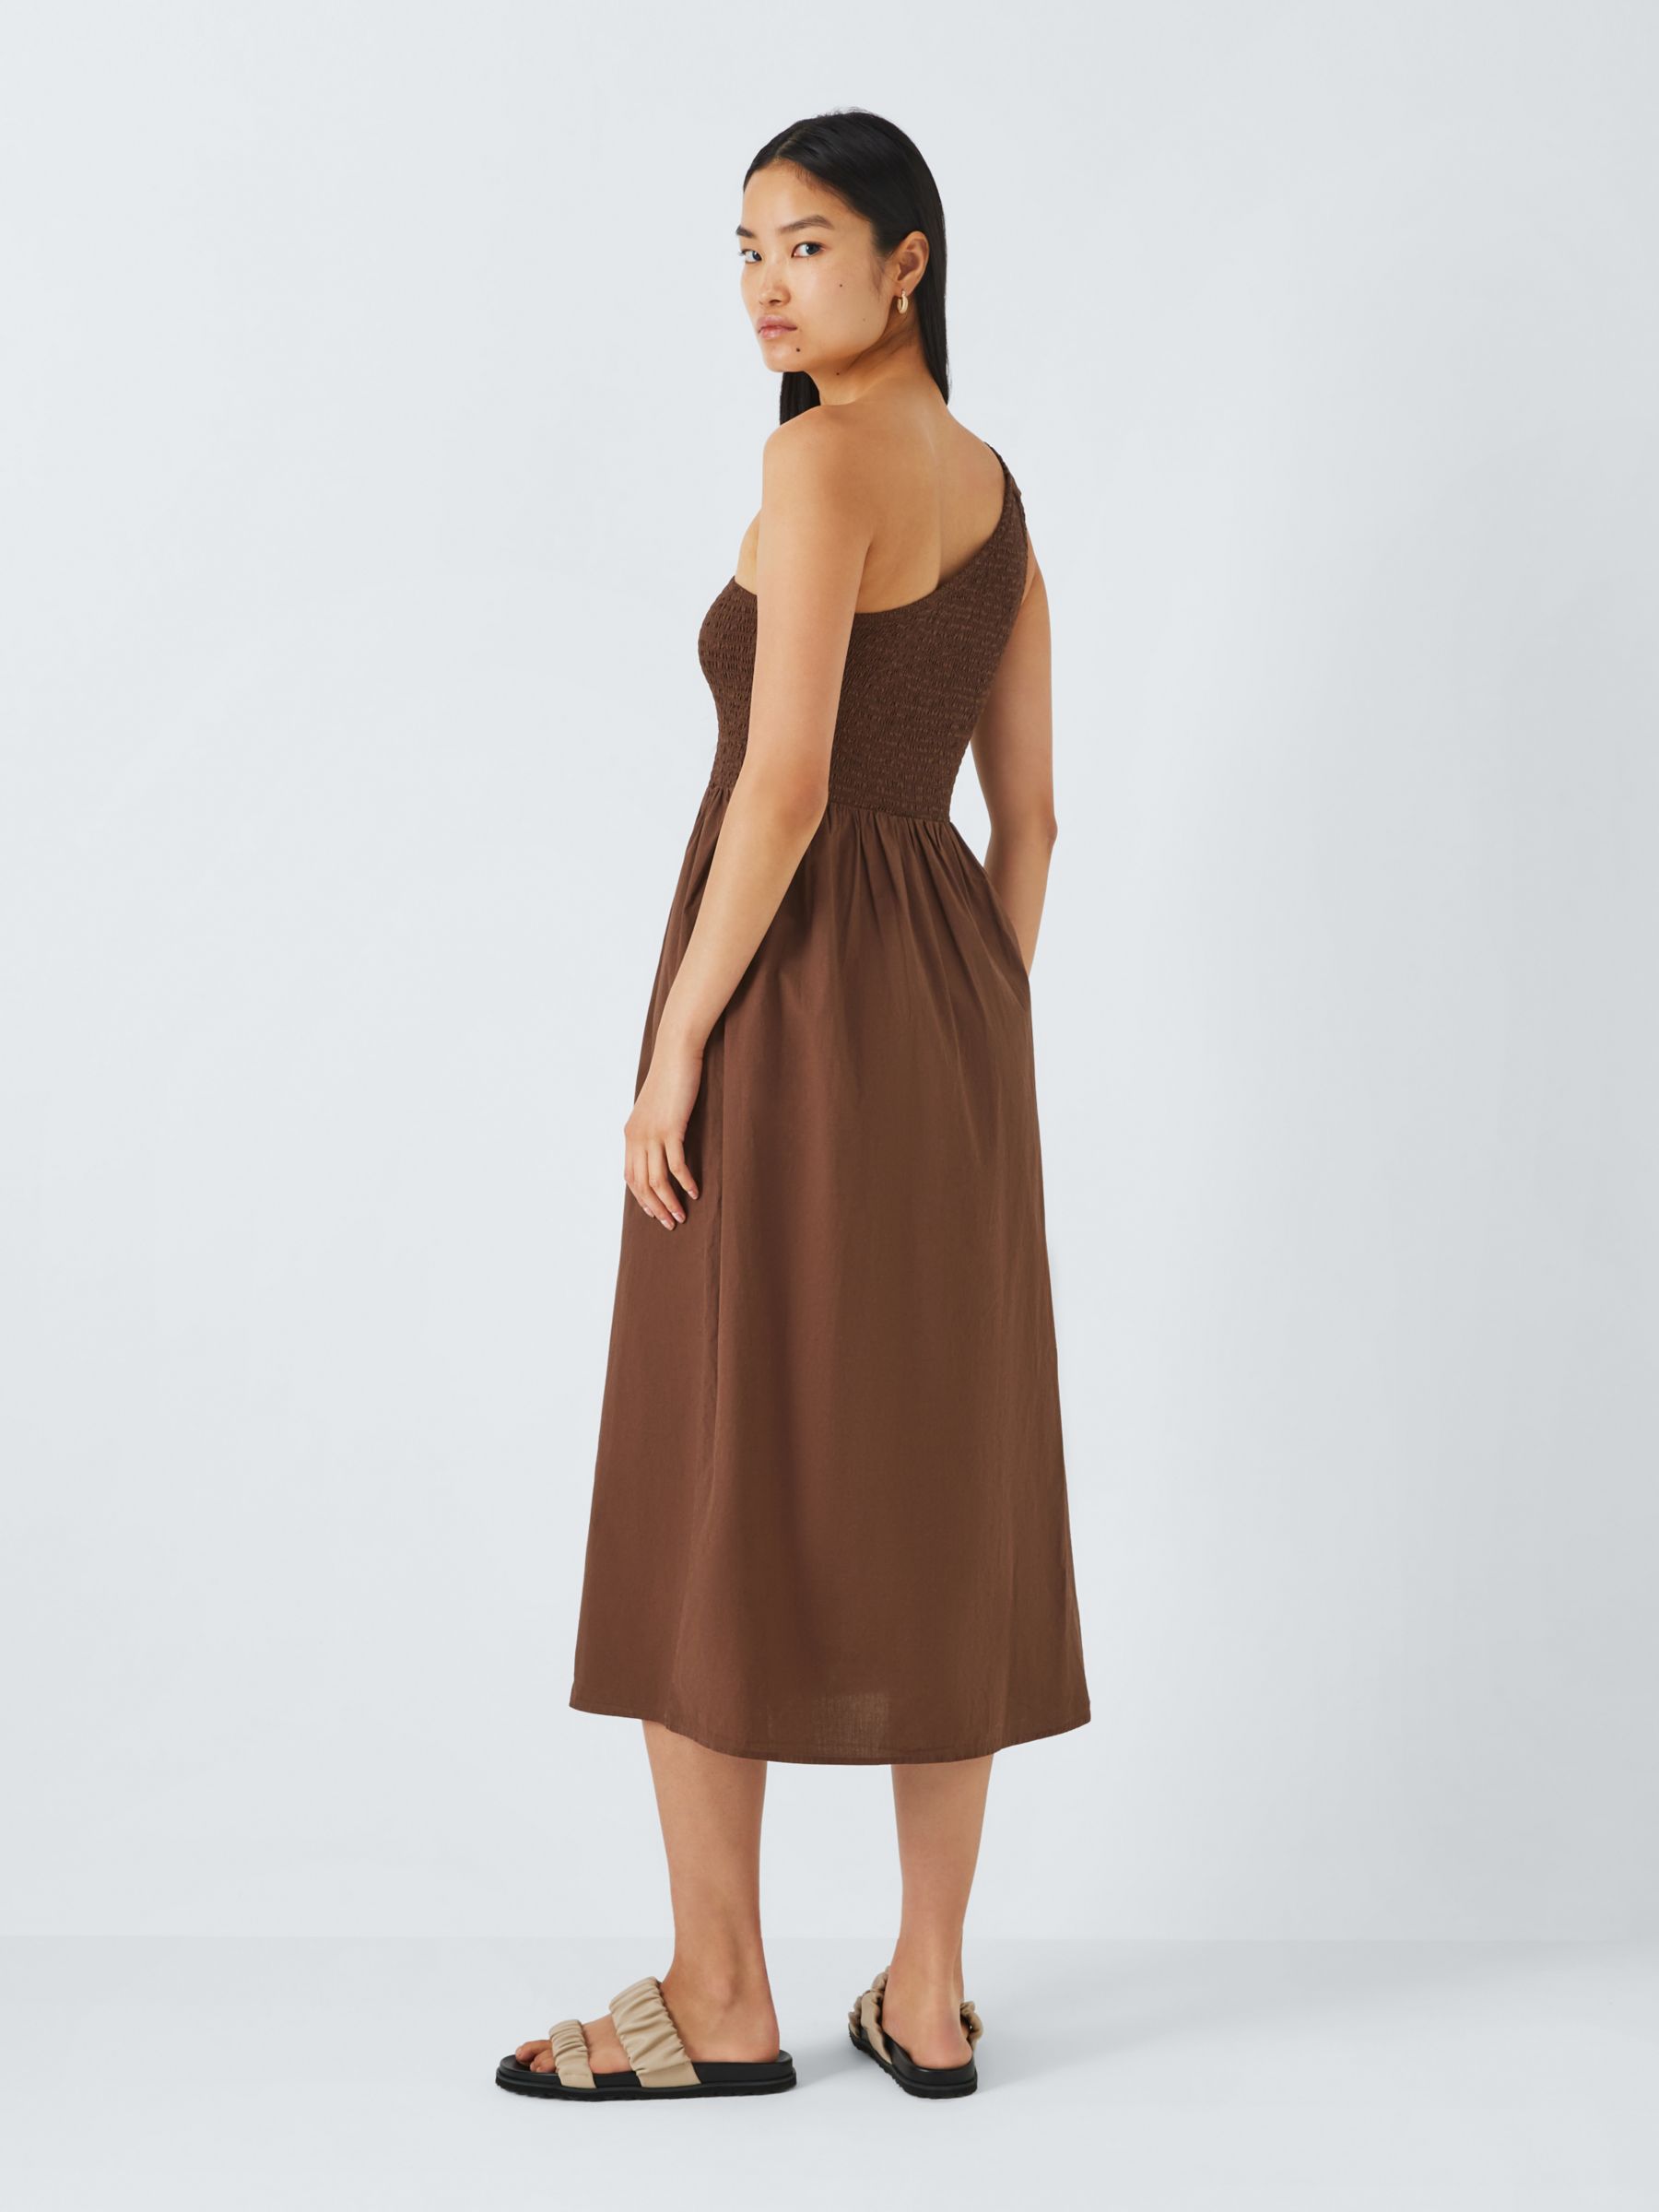 John Lewis ANYDAY Shirred Bodice Asymmetric Dress, Brown, 8